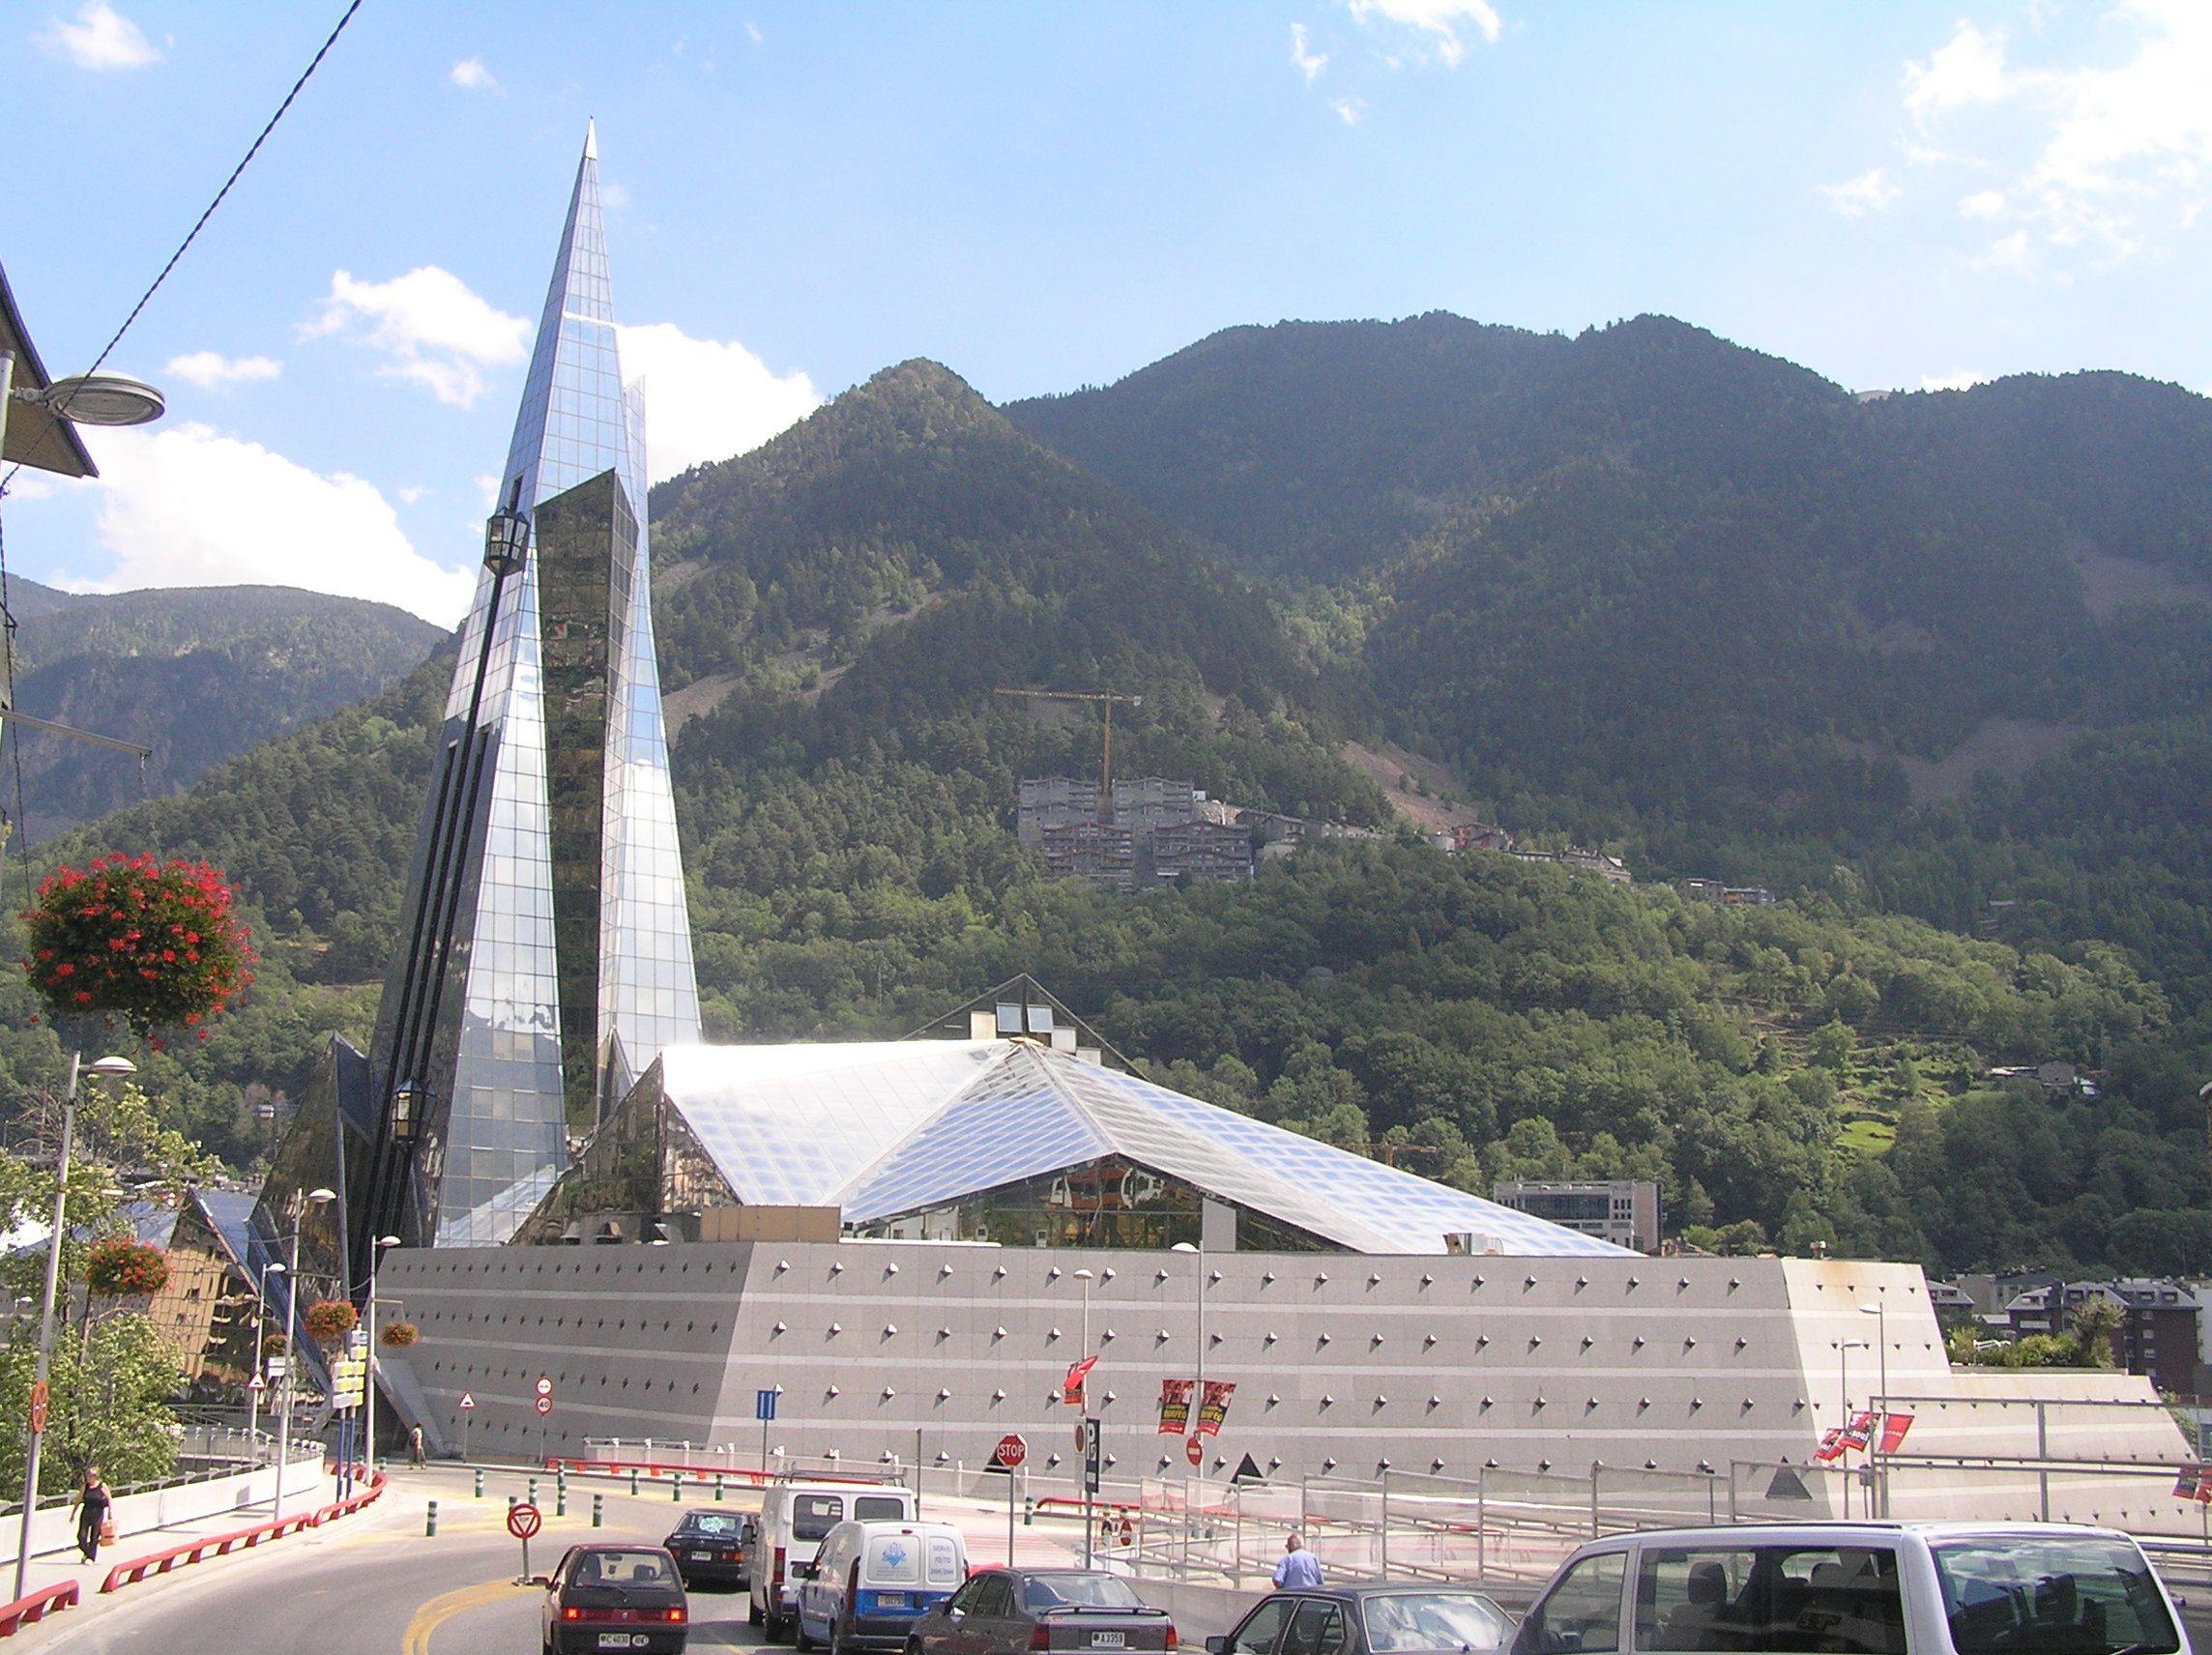 The Andorra la Vella city photo and hotels